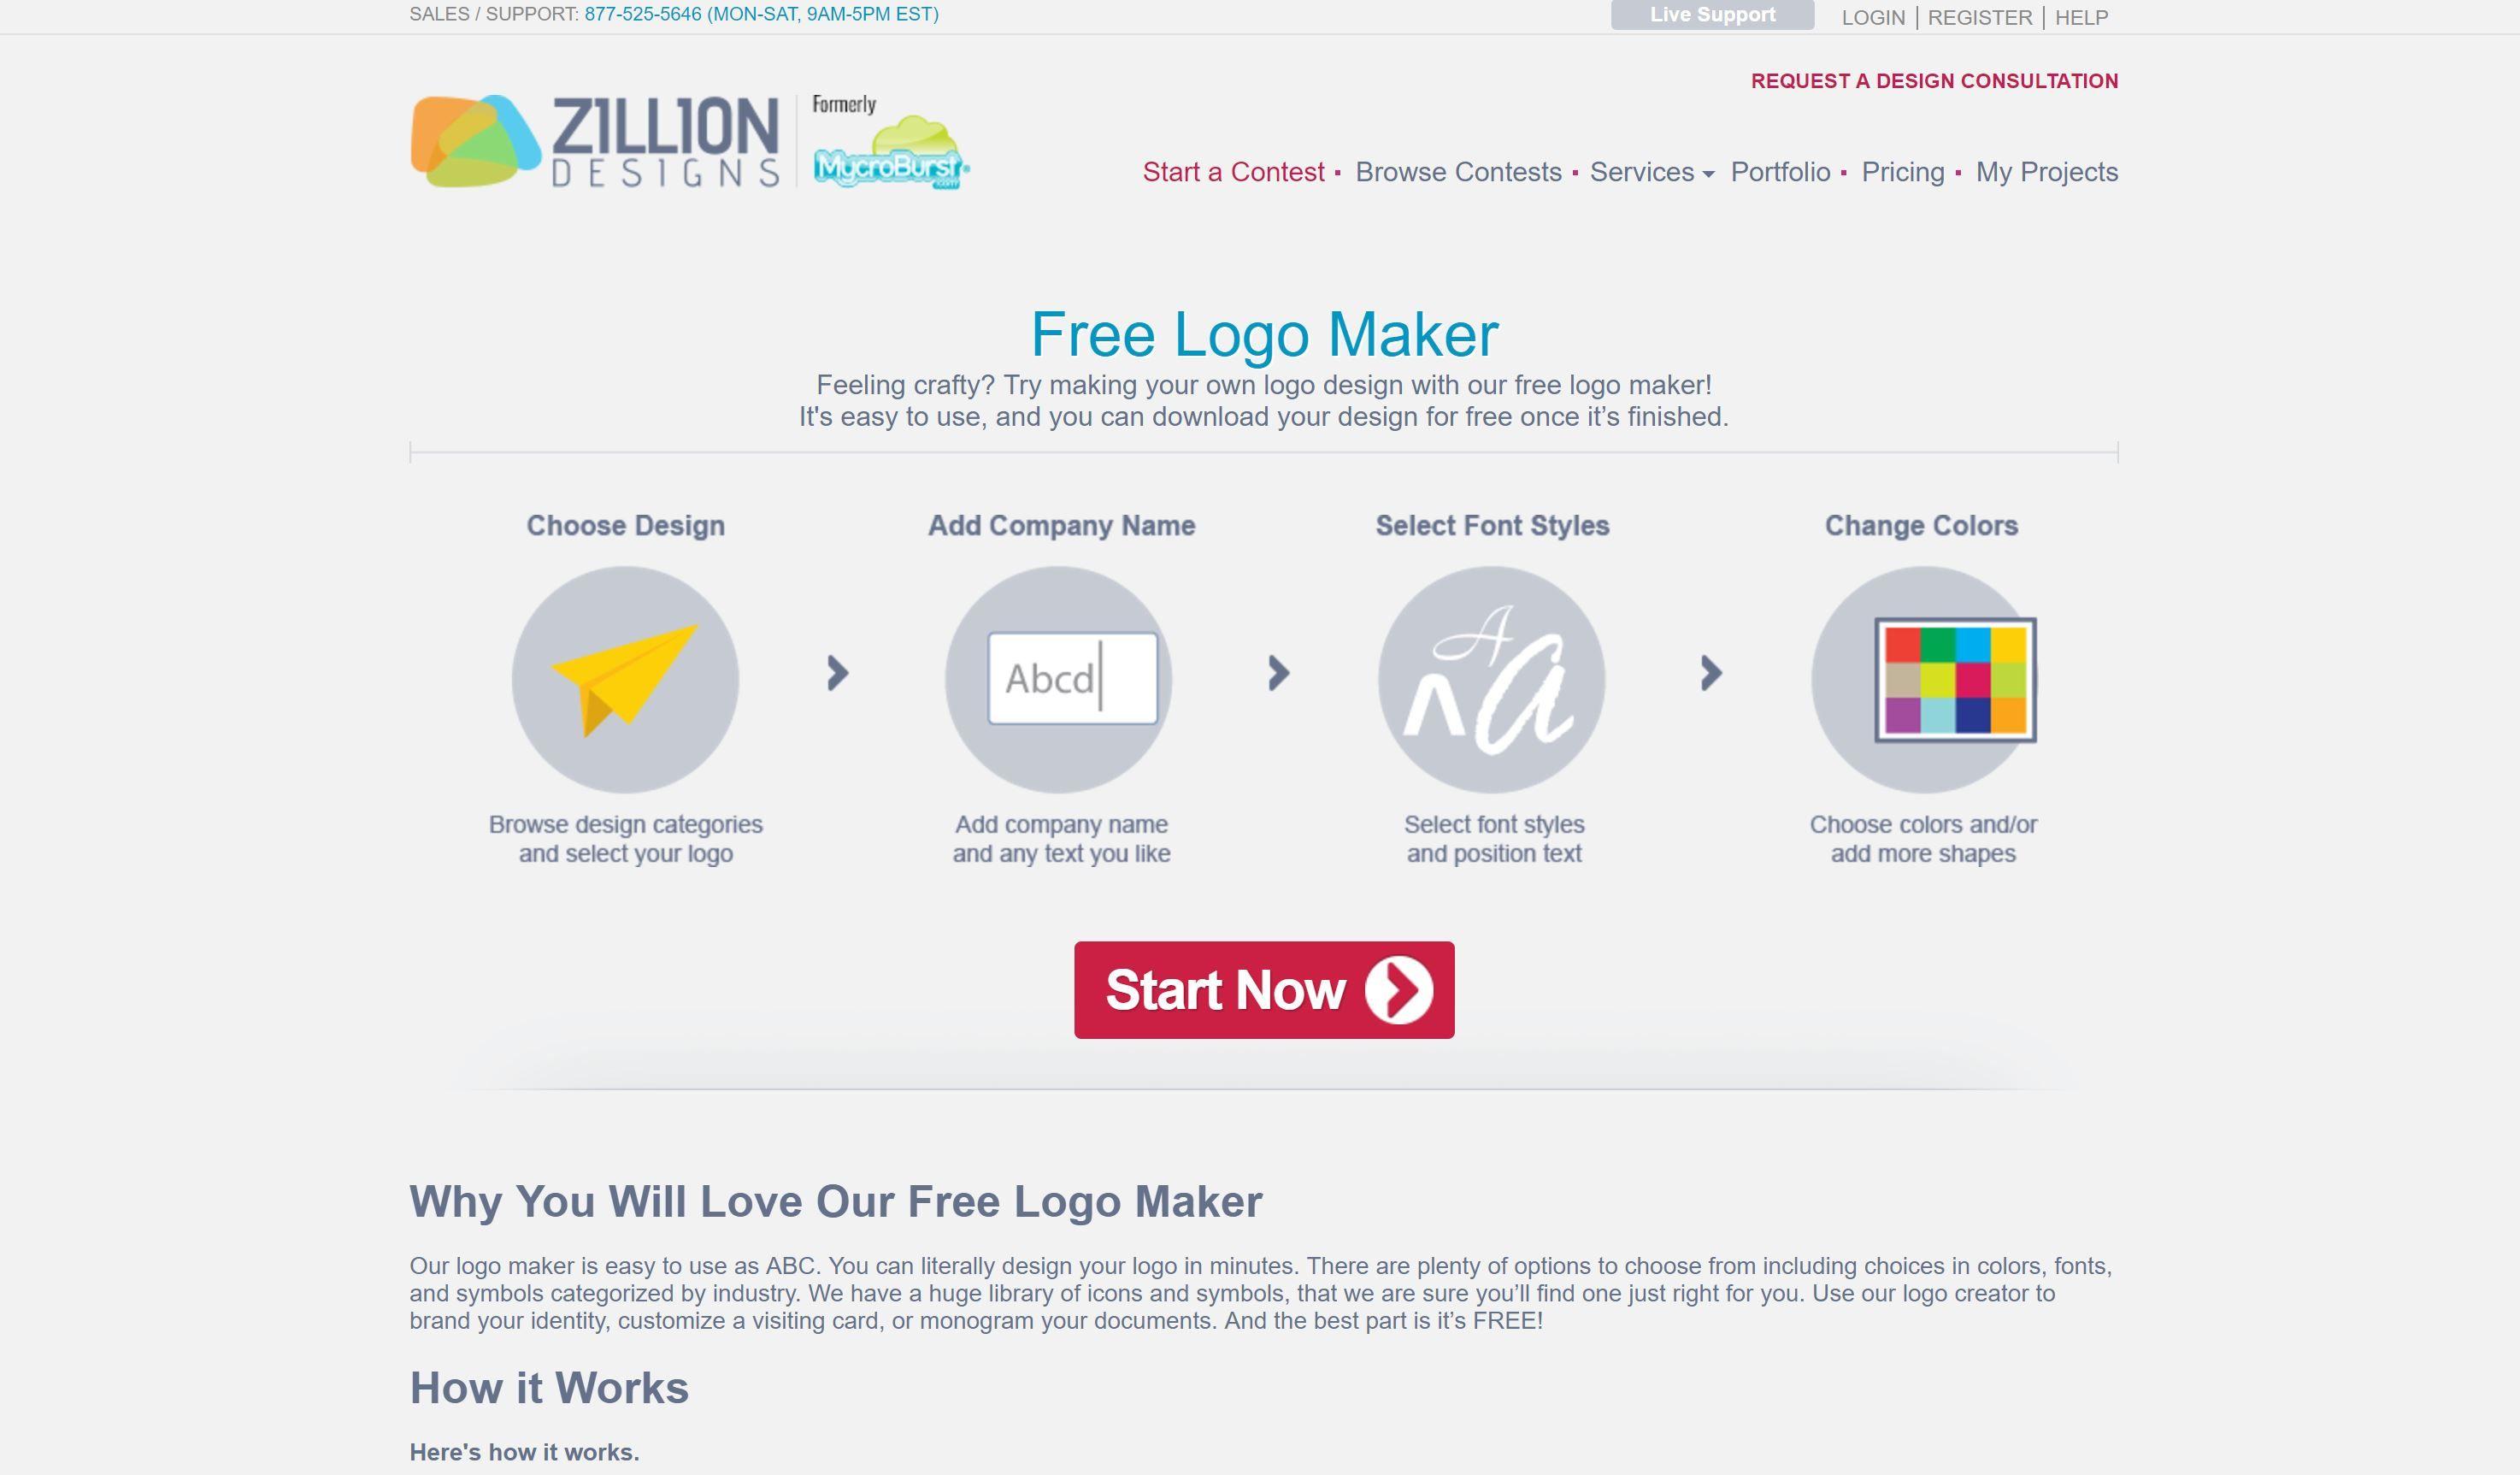 Cool Fake Company Logo - 15 Best FREE Online Logo Makers & Generators - WebsiteSetup.org